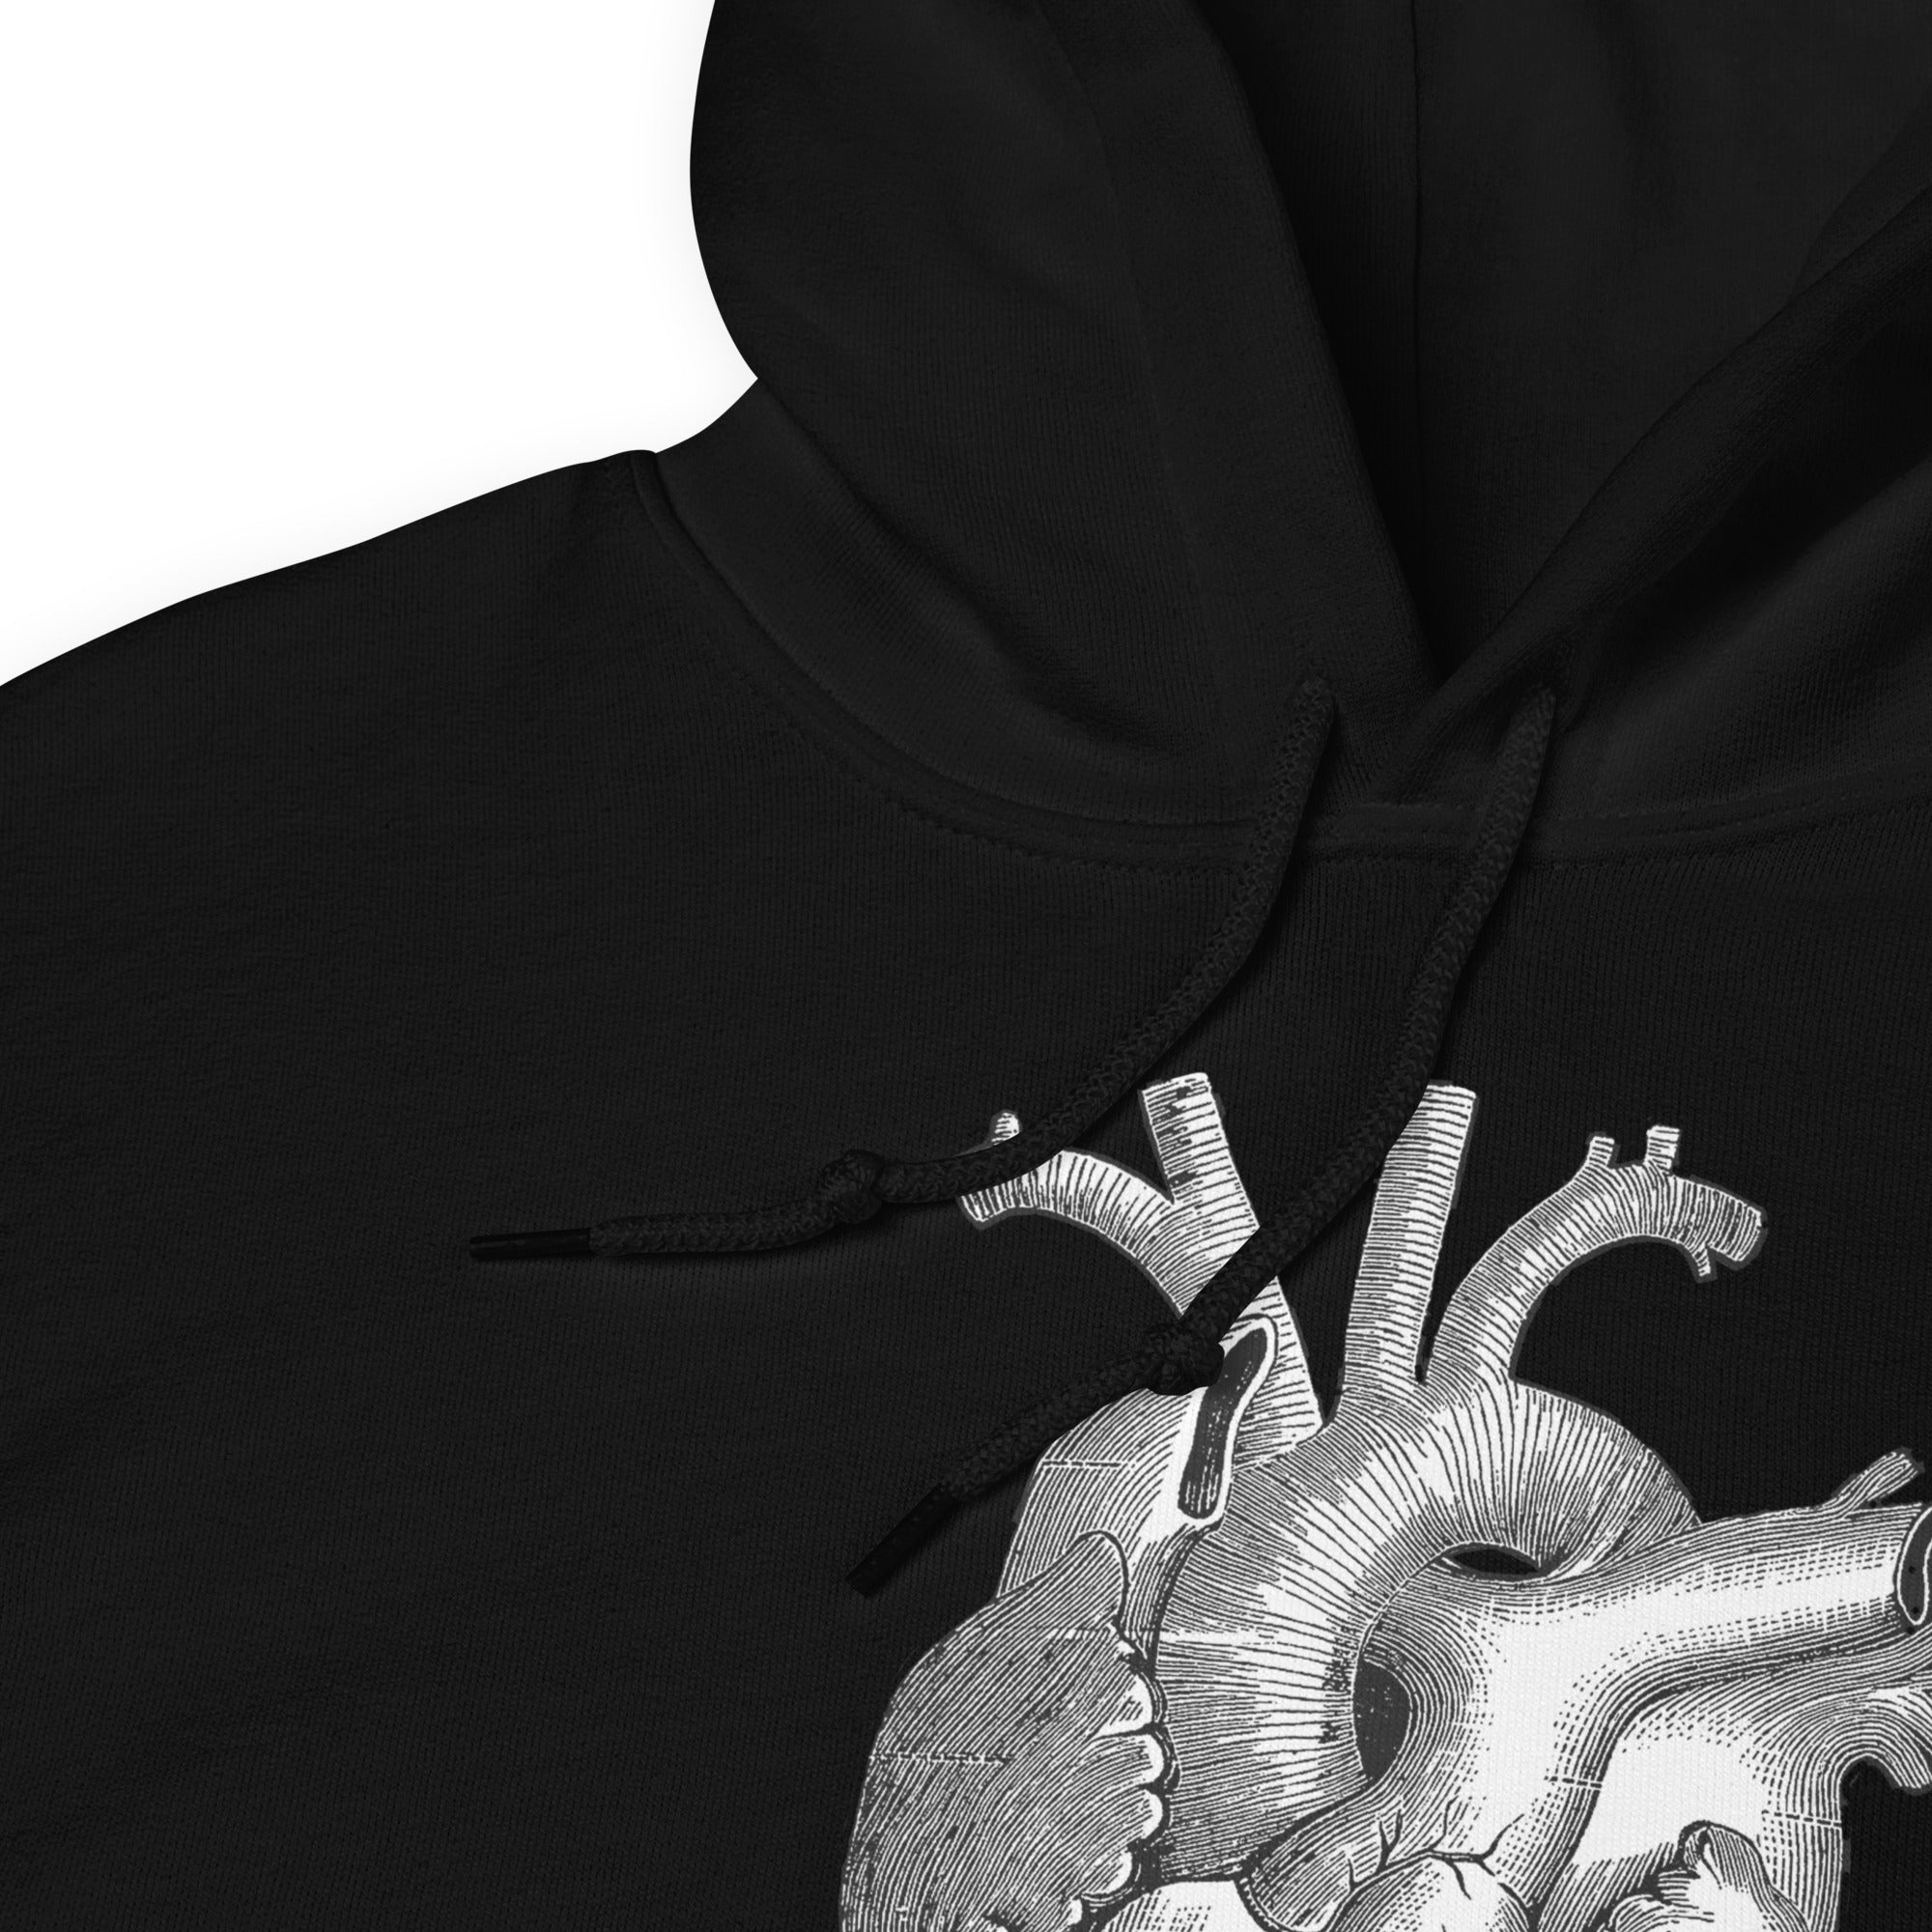 Anatomical Human Heart Medical Art Unisex Hoodie Sweatshirt Black and White - Edge of Life Designs